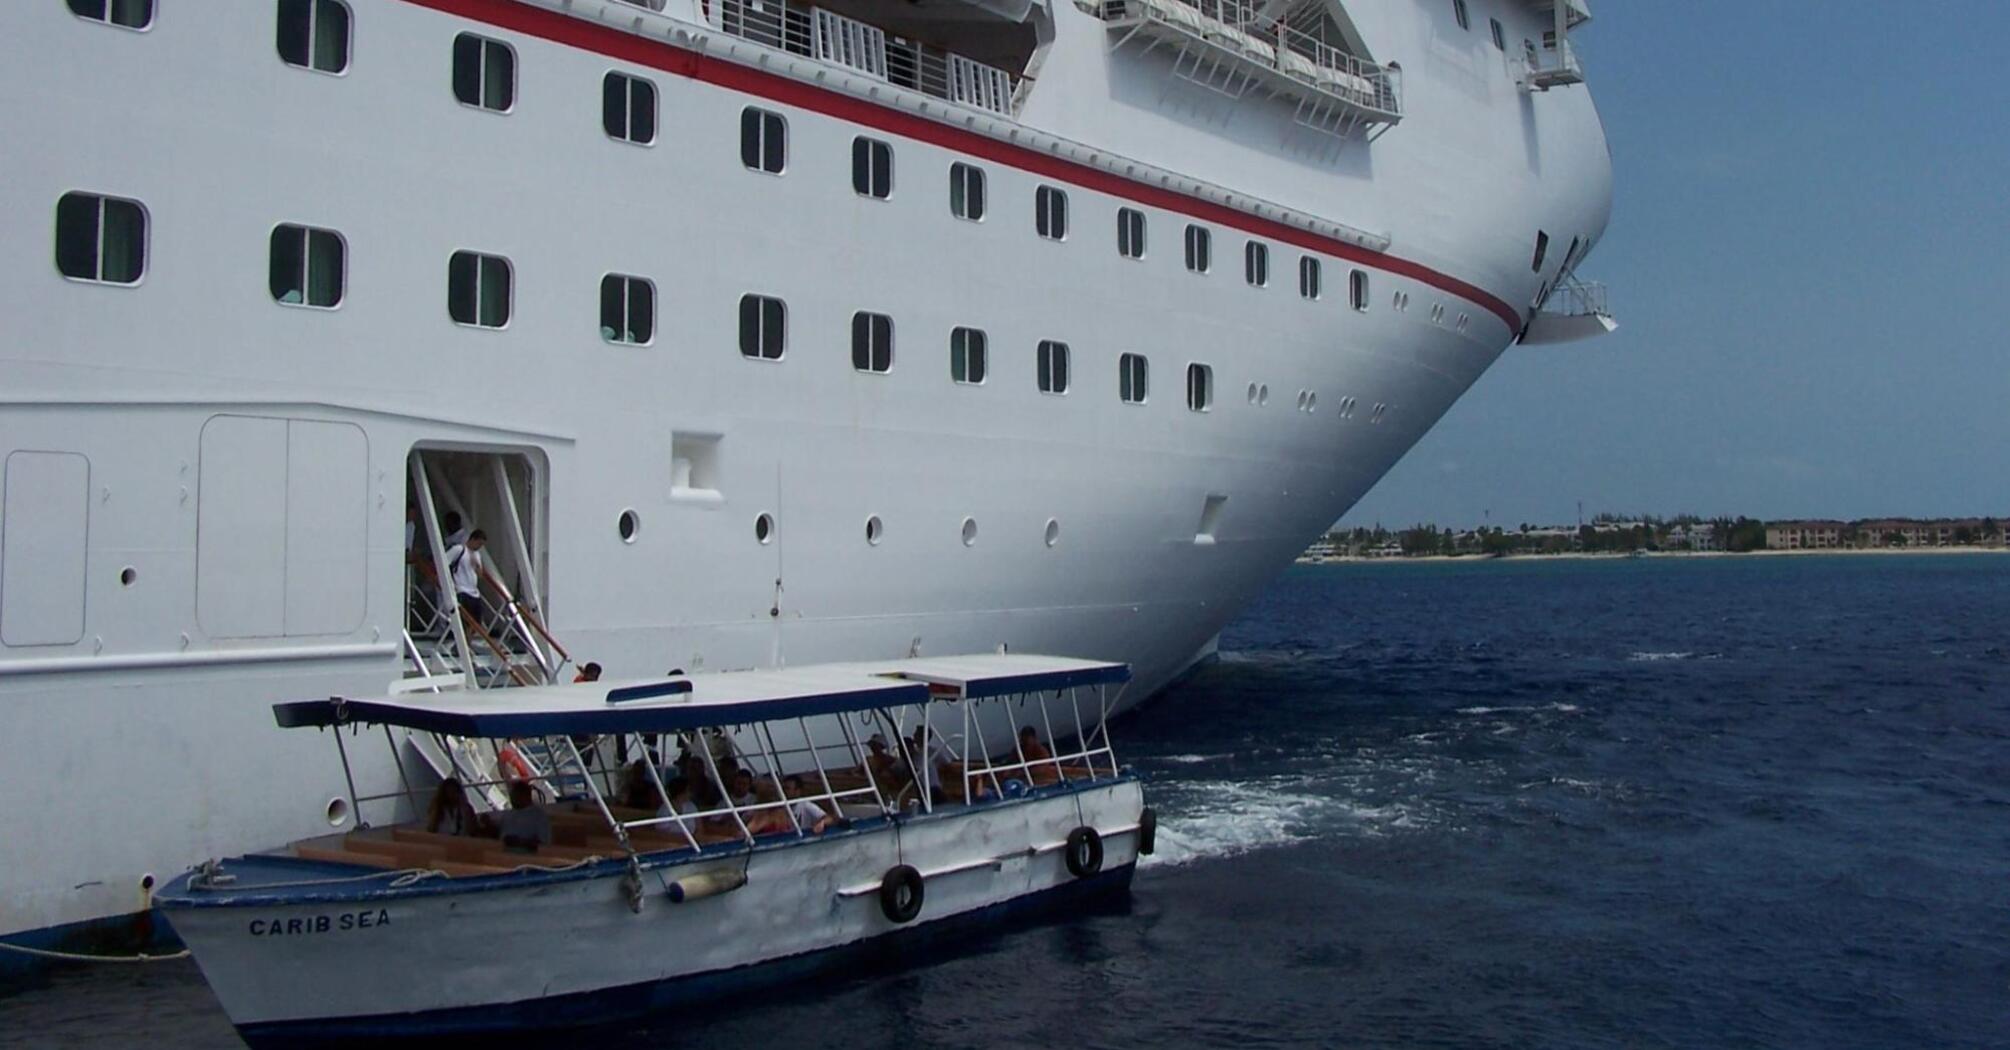 Cruise ship Carnival and a small boat Carib Sea